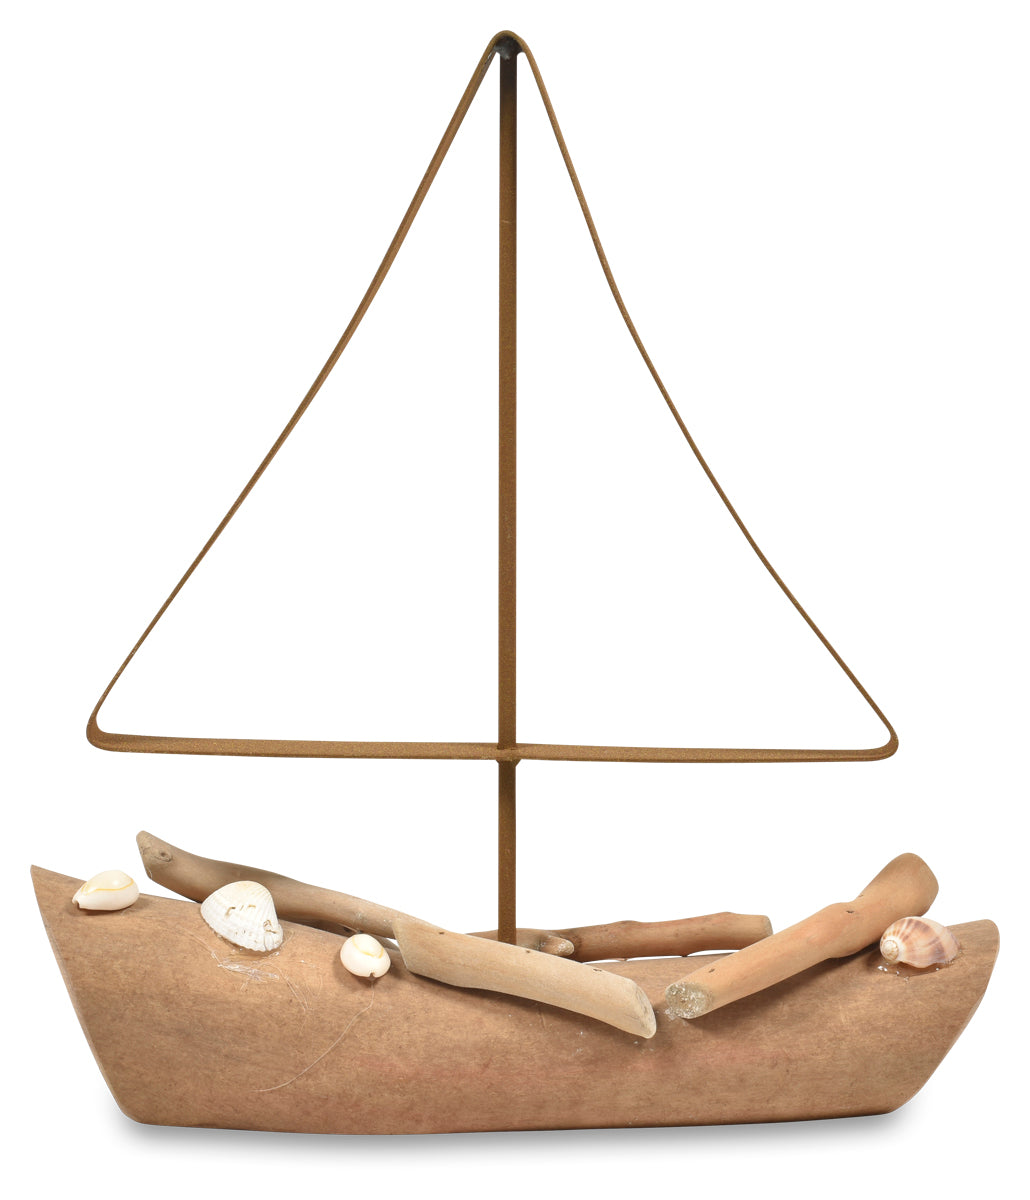 Medium Driftwood Boat Ornament